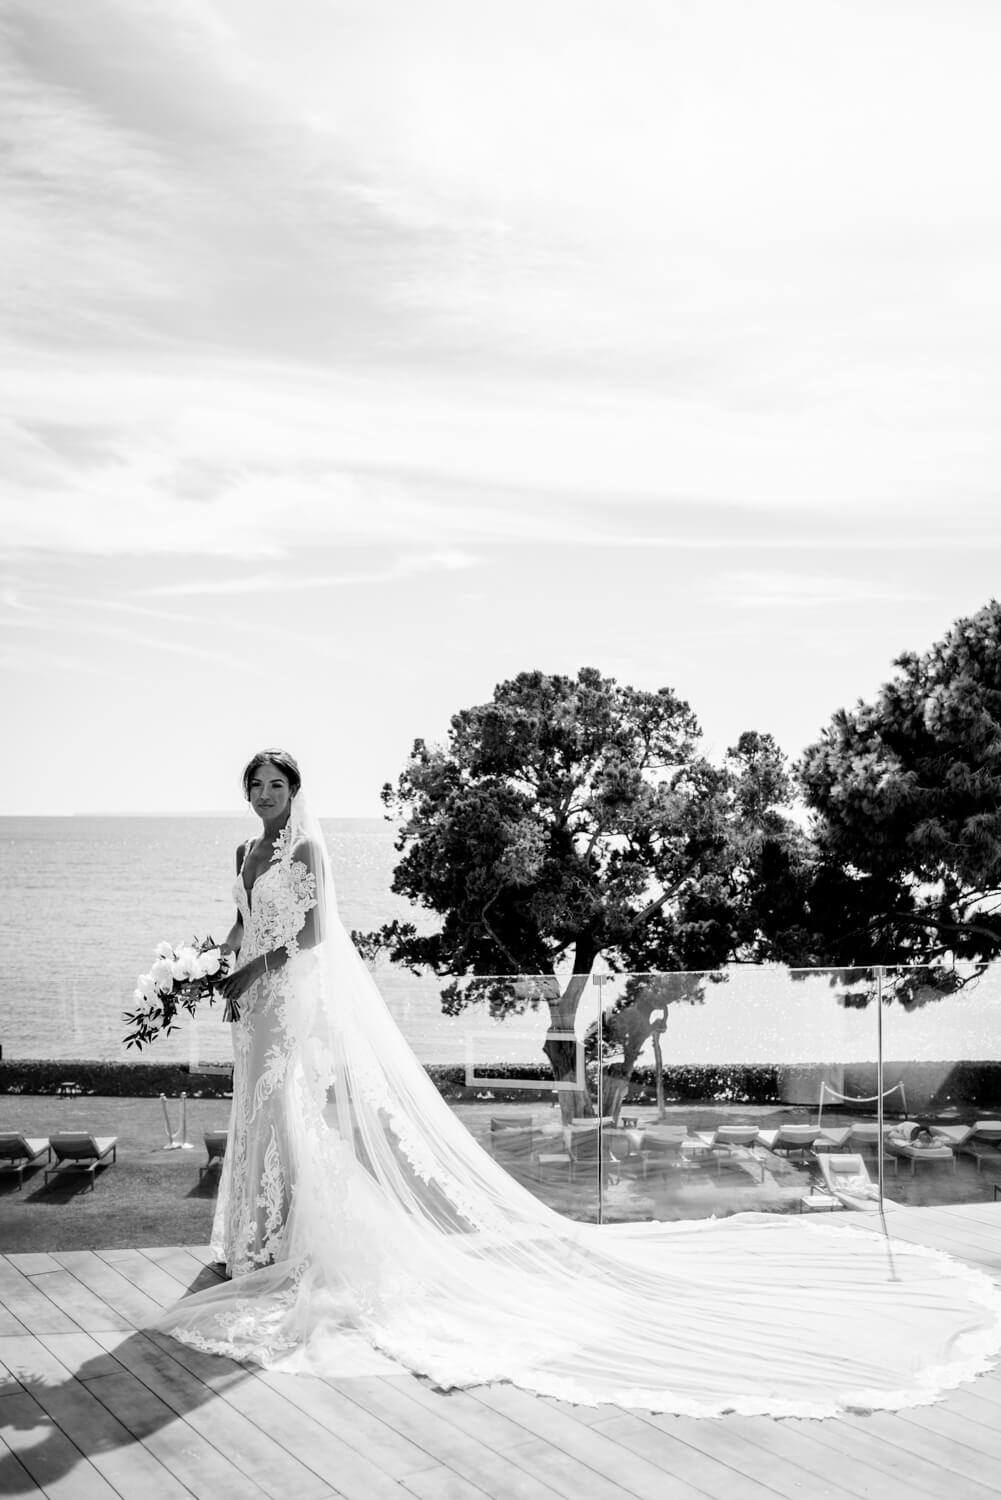 Ibiza Bride Wedding Dress, Nikki beach - seaview